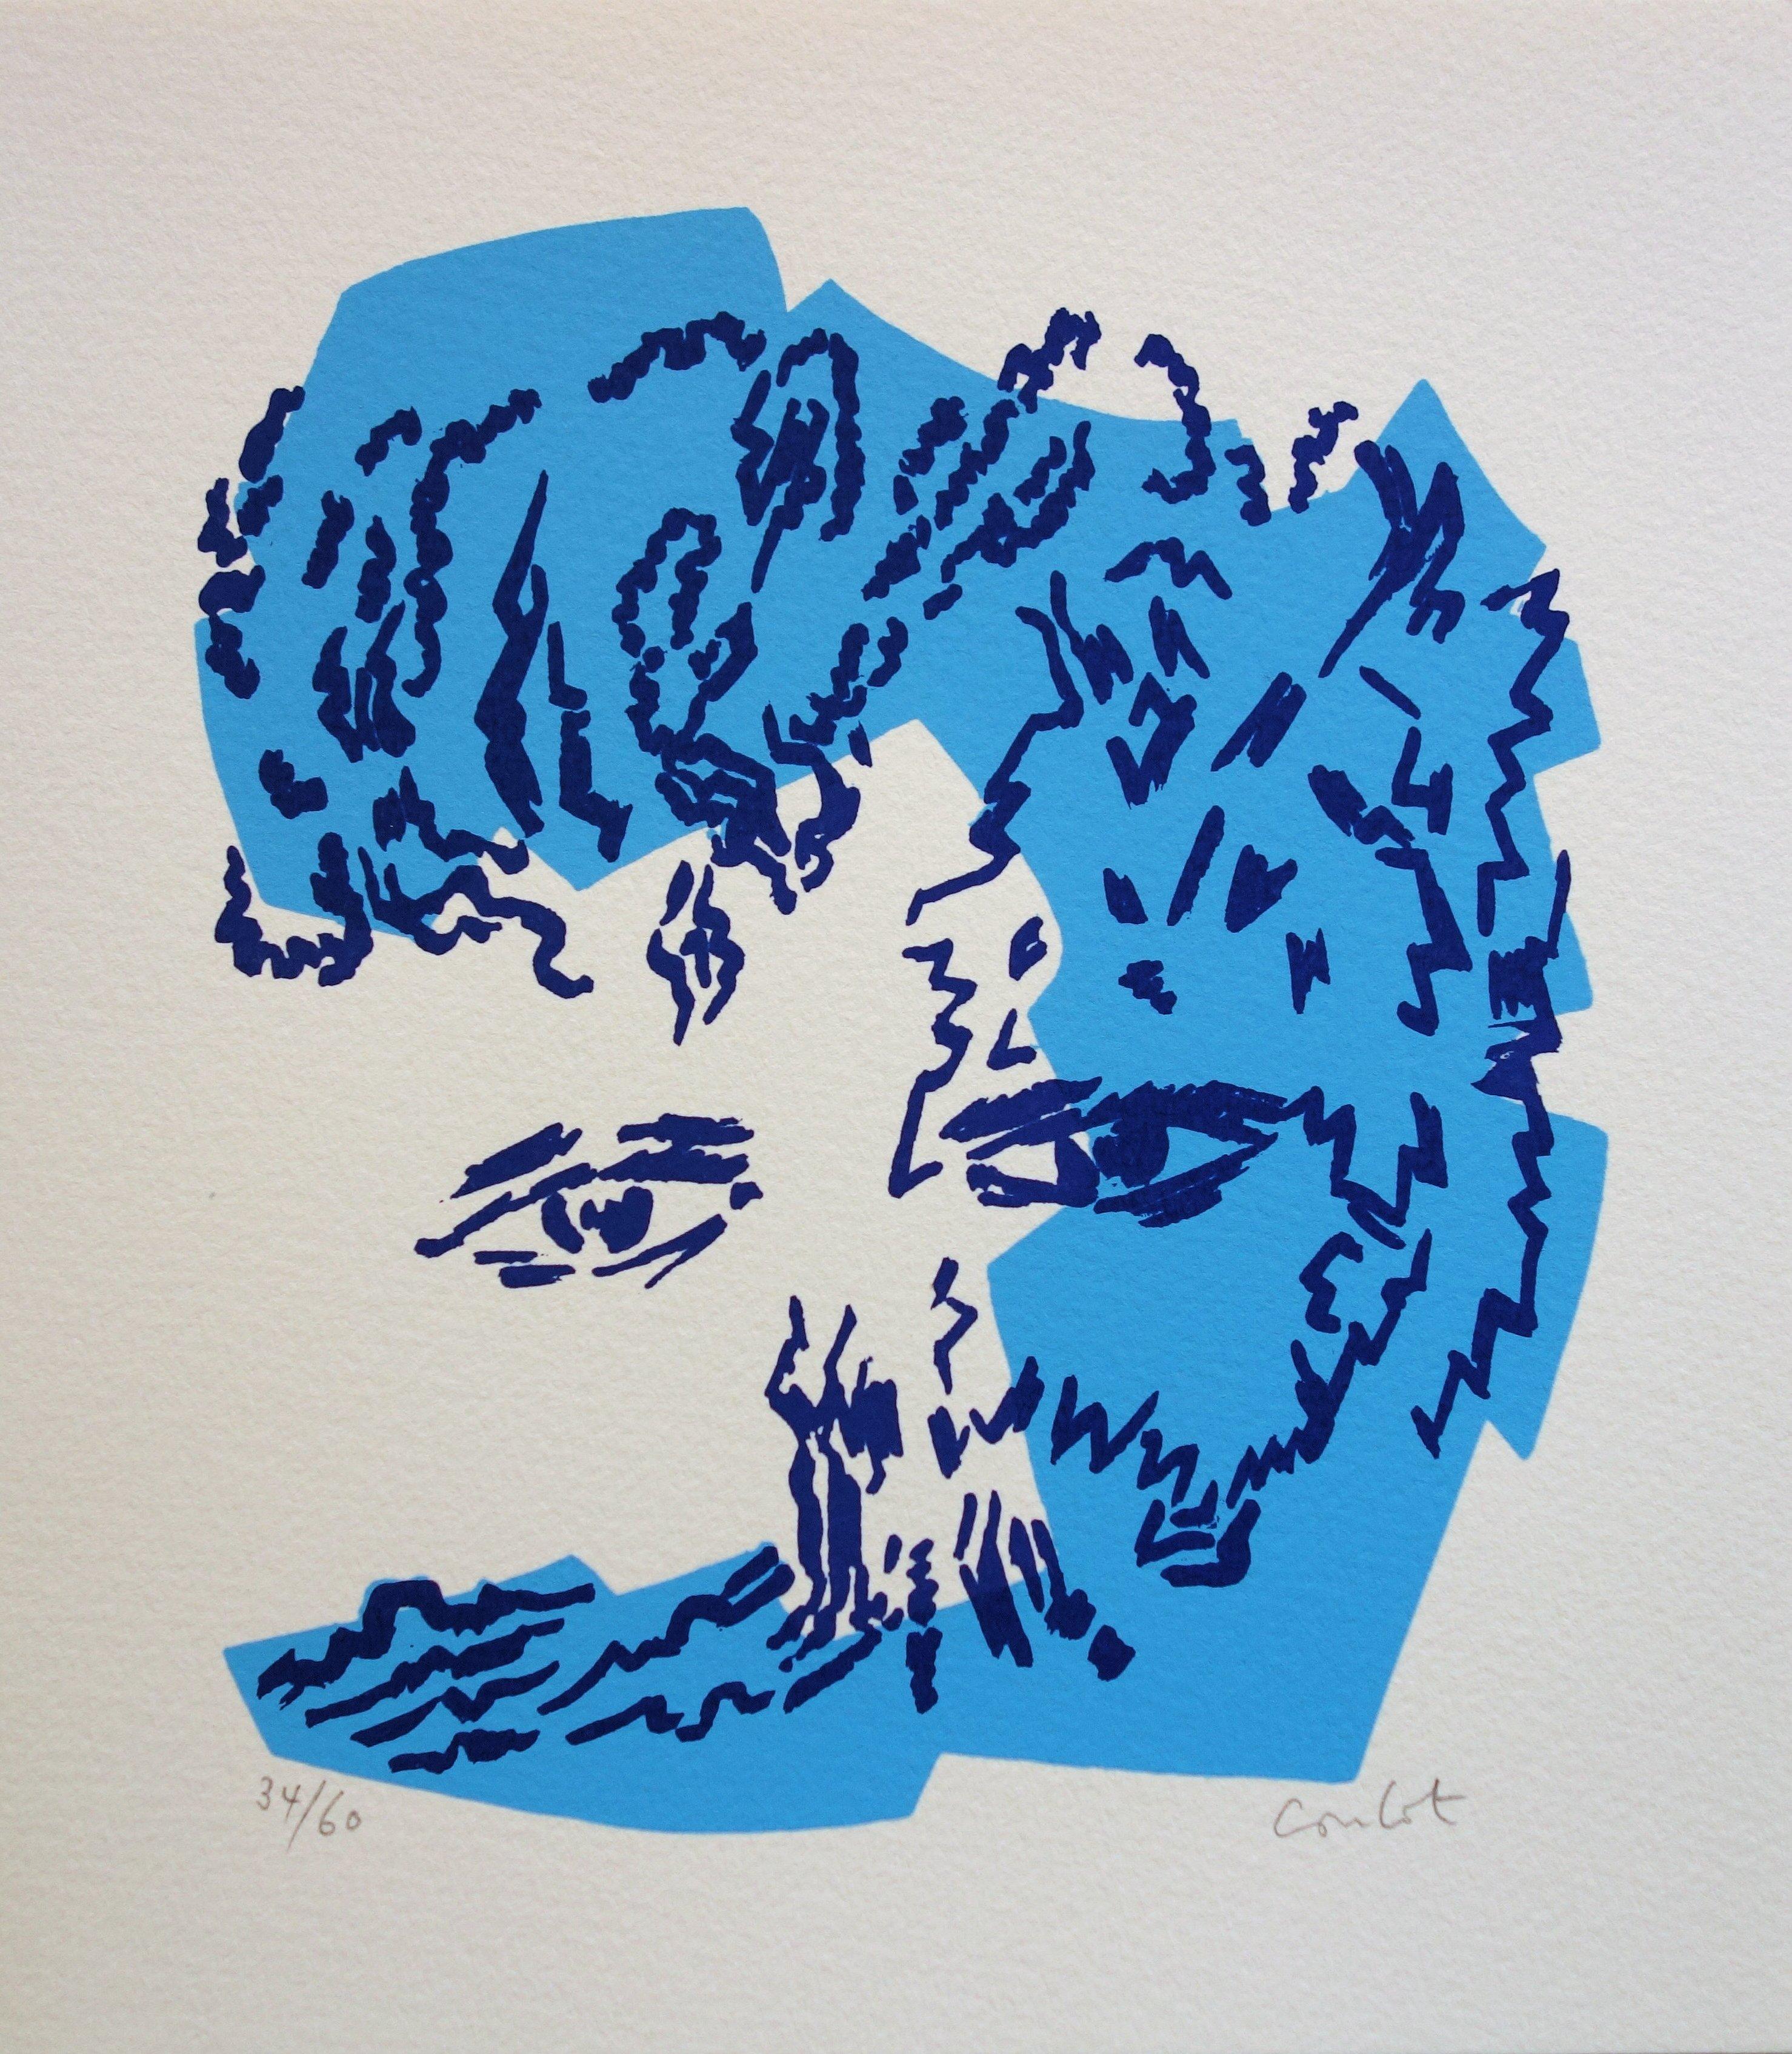 Jean Coulot Portrait Print - The Philosopher Nietzsche - Original Handsigned Screen Print /60ex